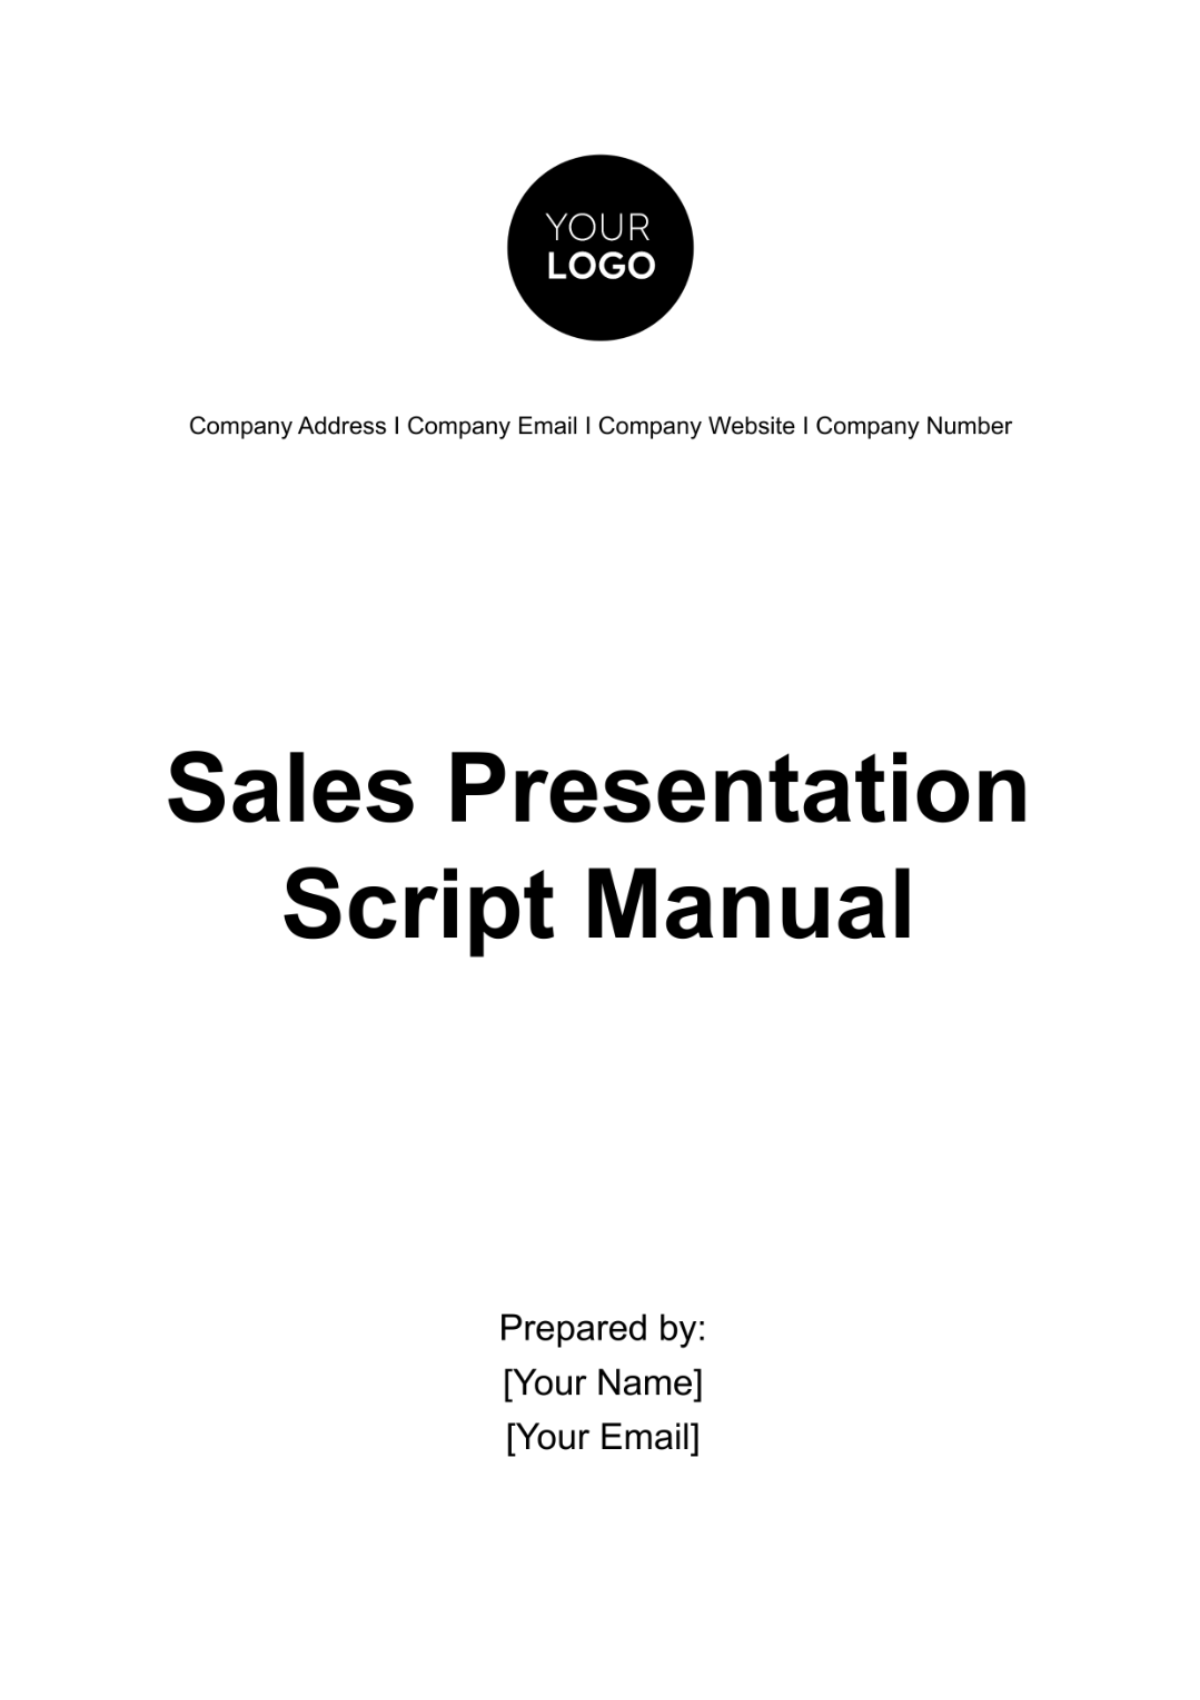 Free Sales Presentation Script Manual Template